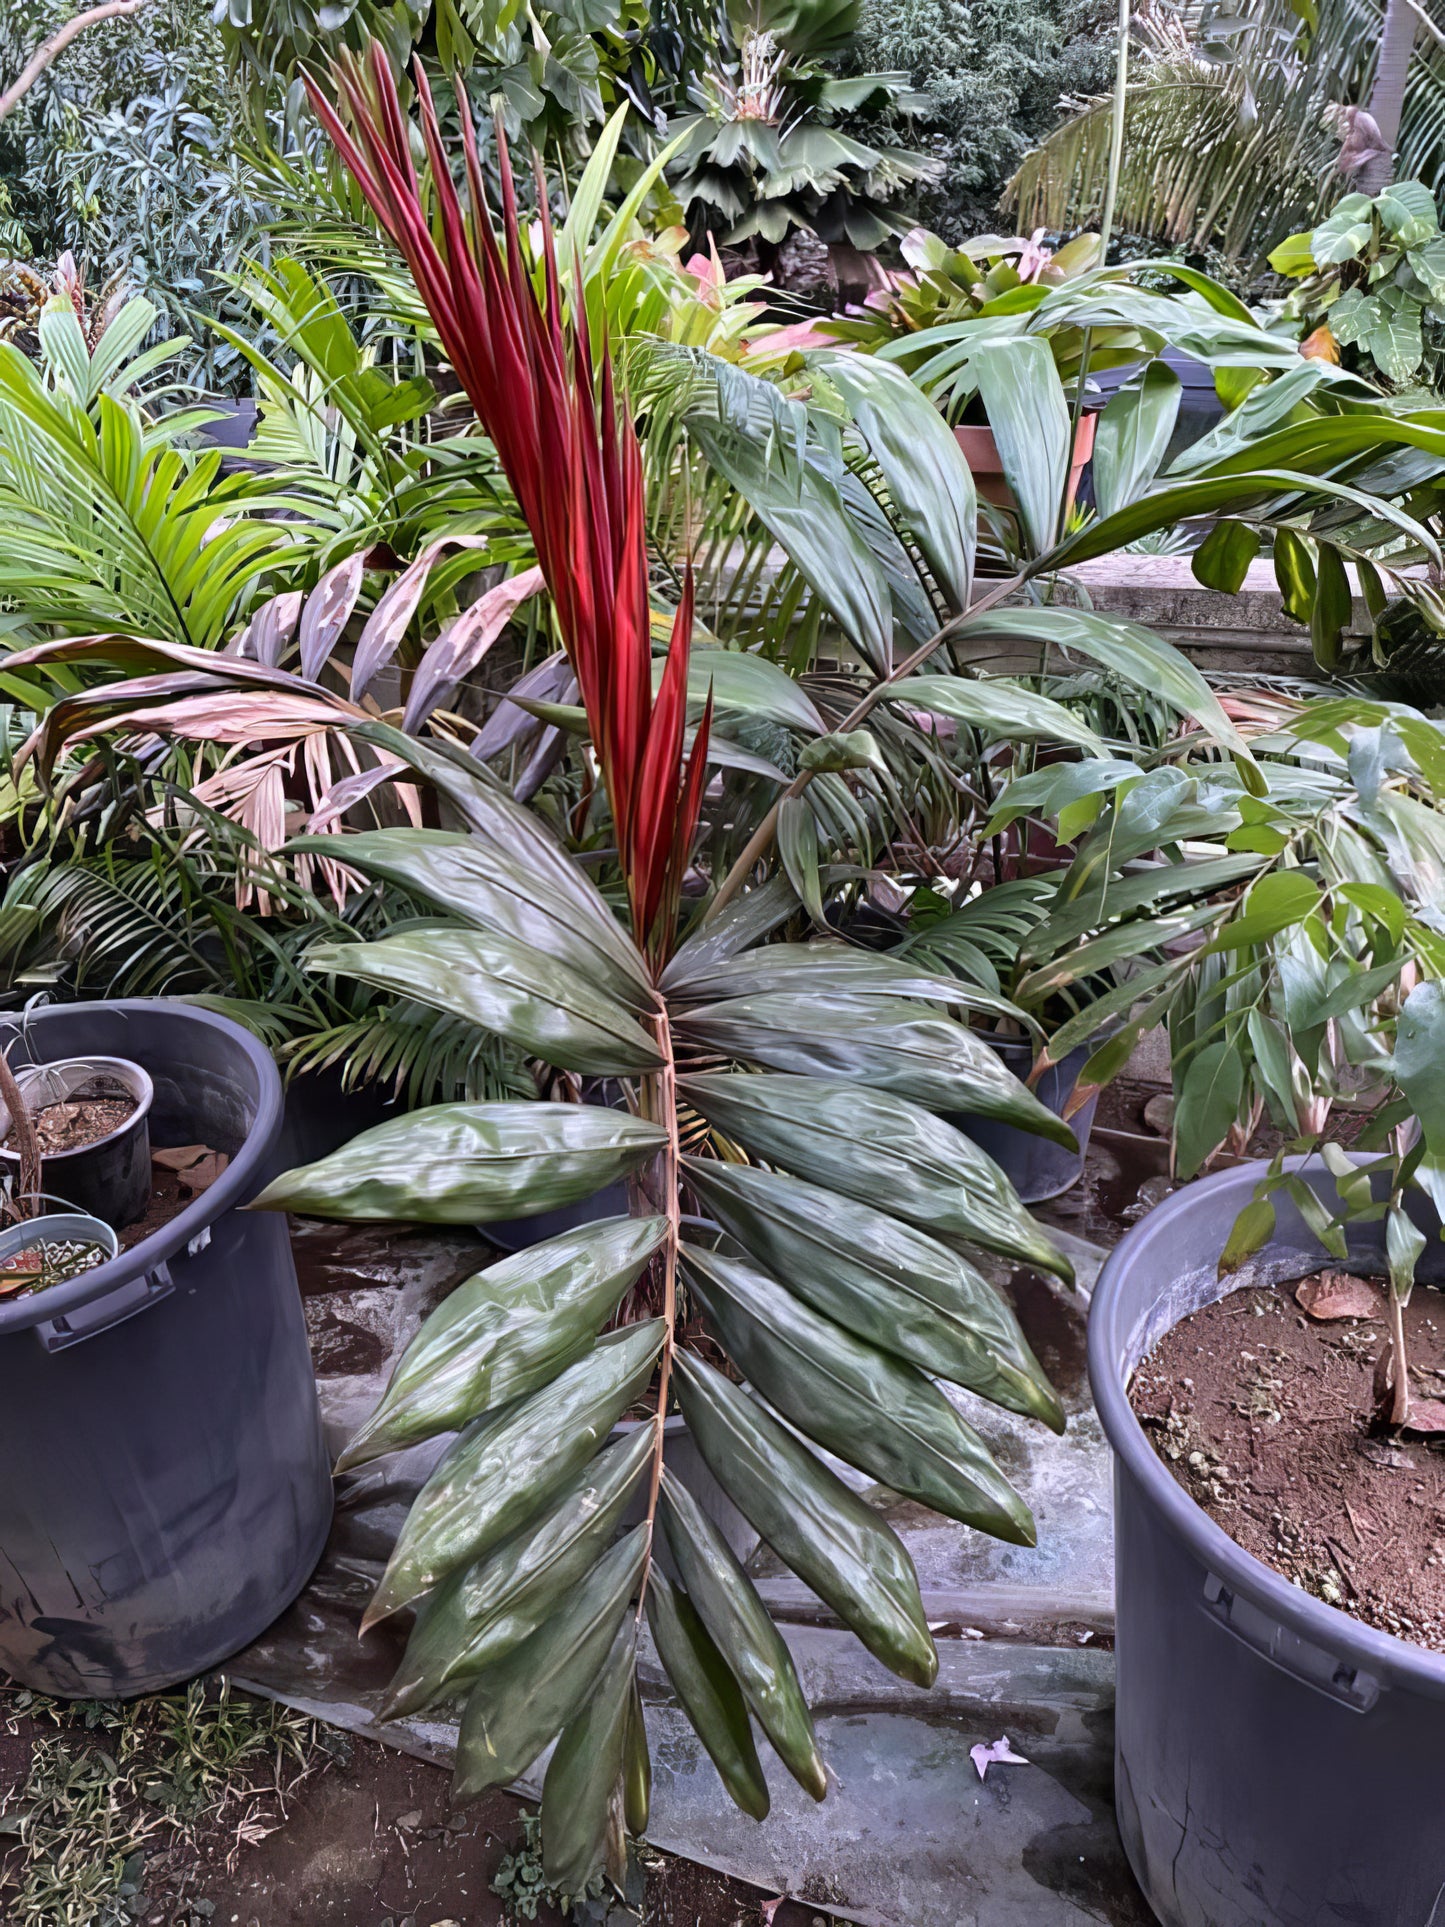 Chambeyronia macrocarpa 'Hookeri', Red Leaf Palm -3°C (27°F) - 2 X fresh seeds